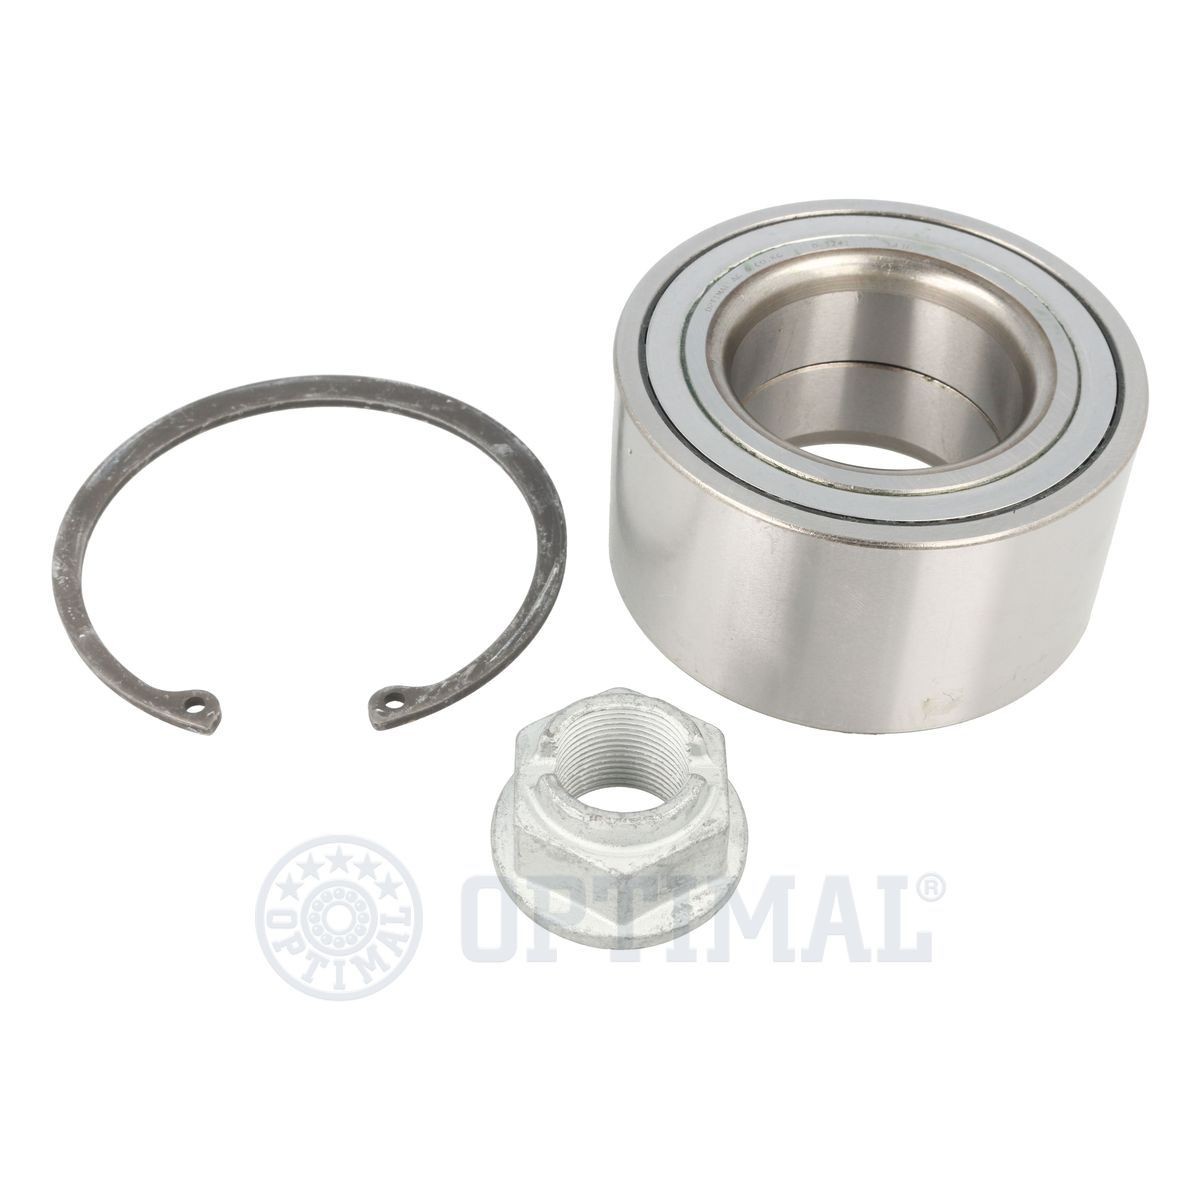 OPTIMAL 400700 Wheel bearing kit with integrated magnetic sensor ring, 98 mm